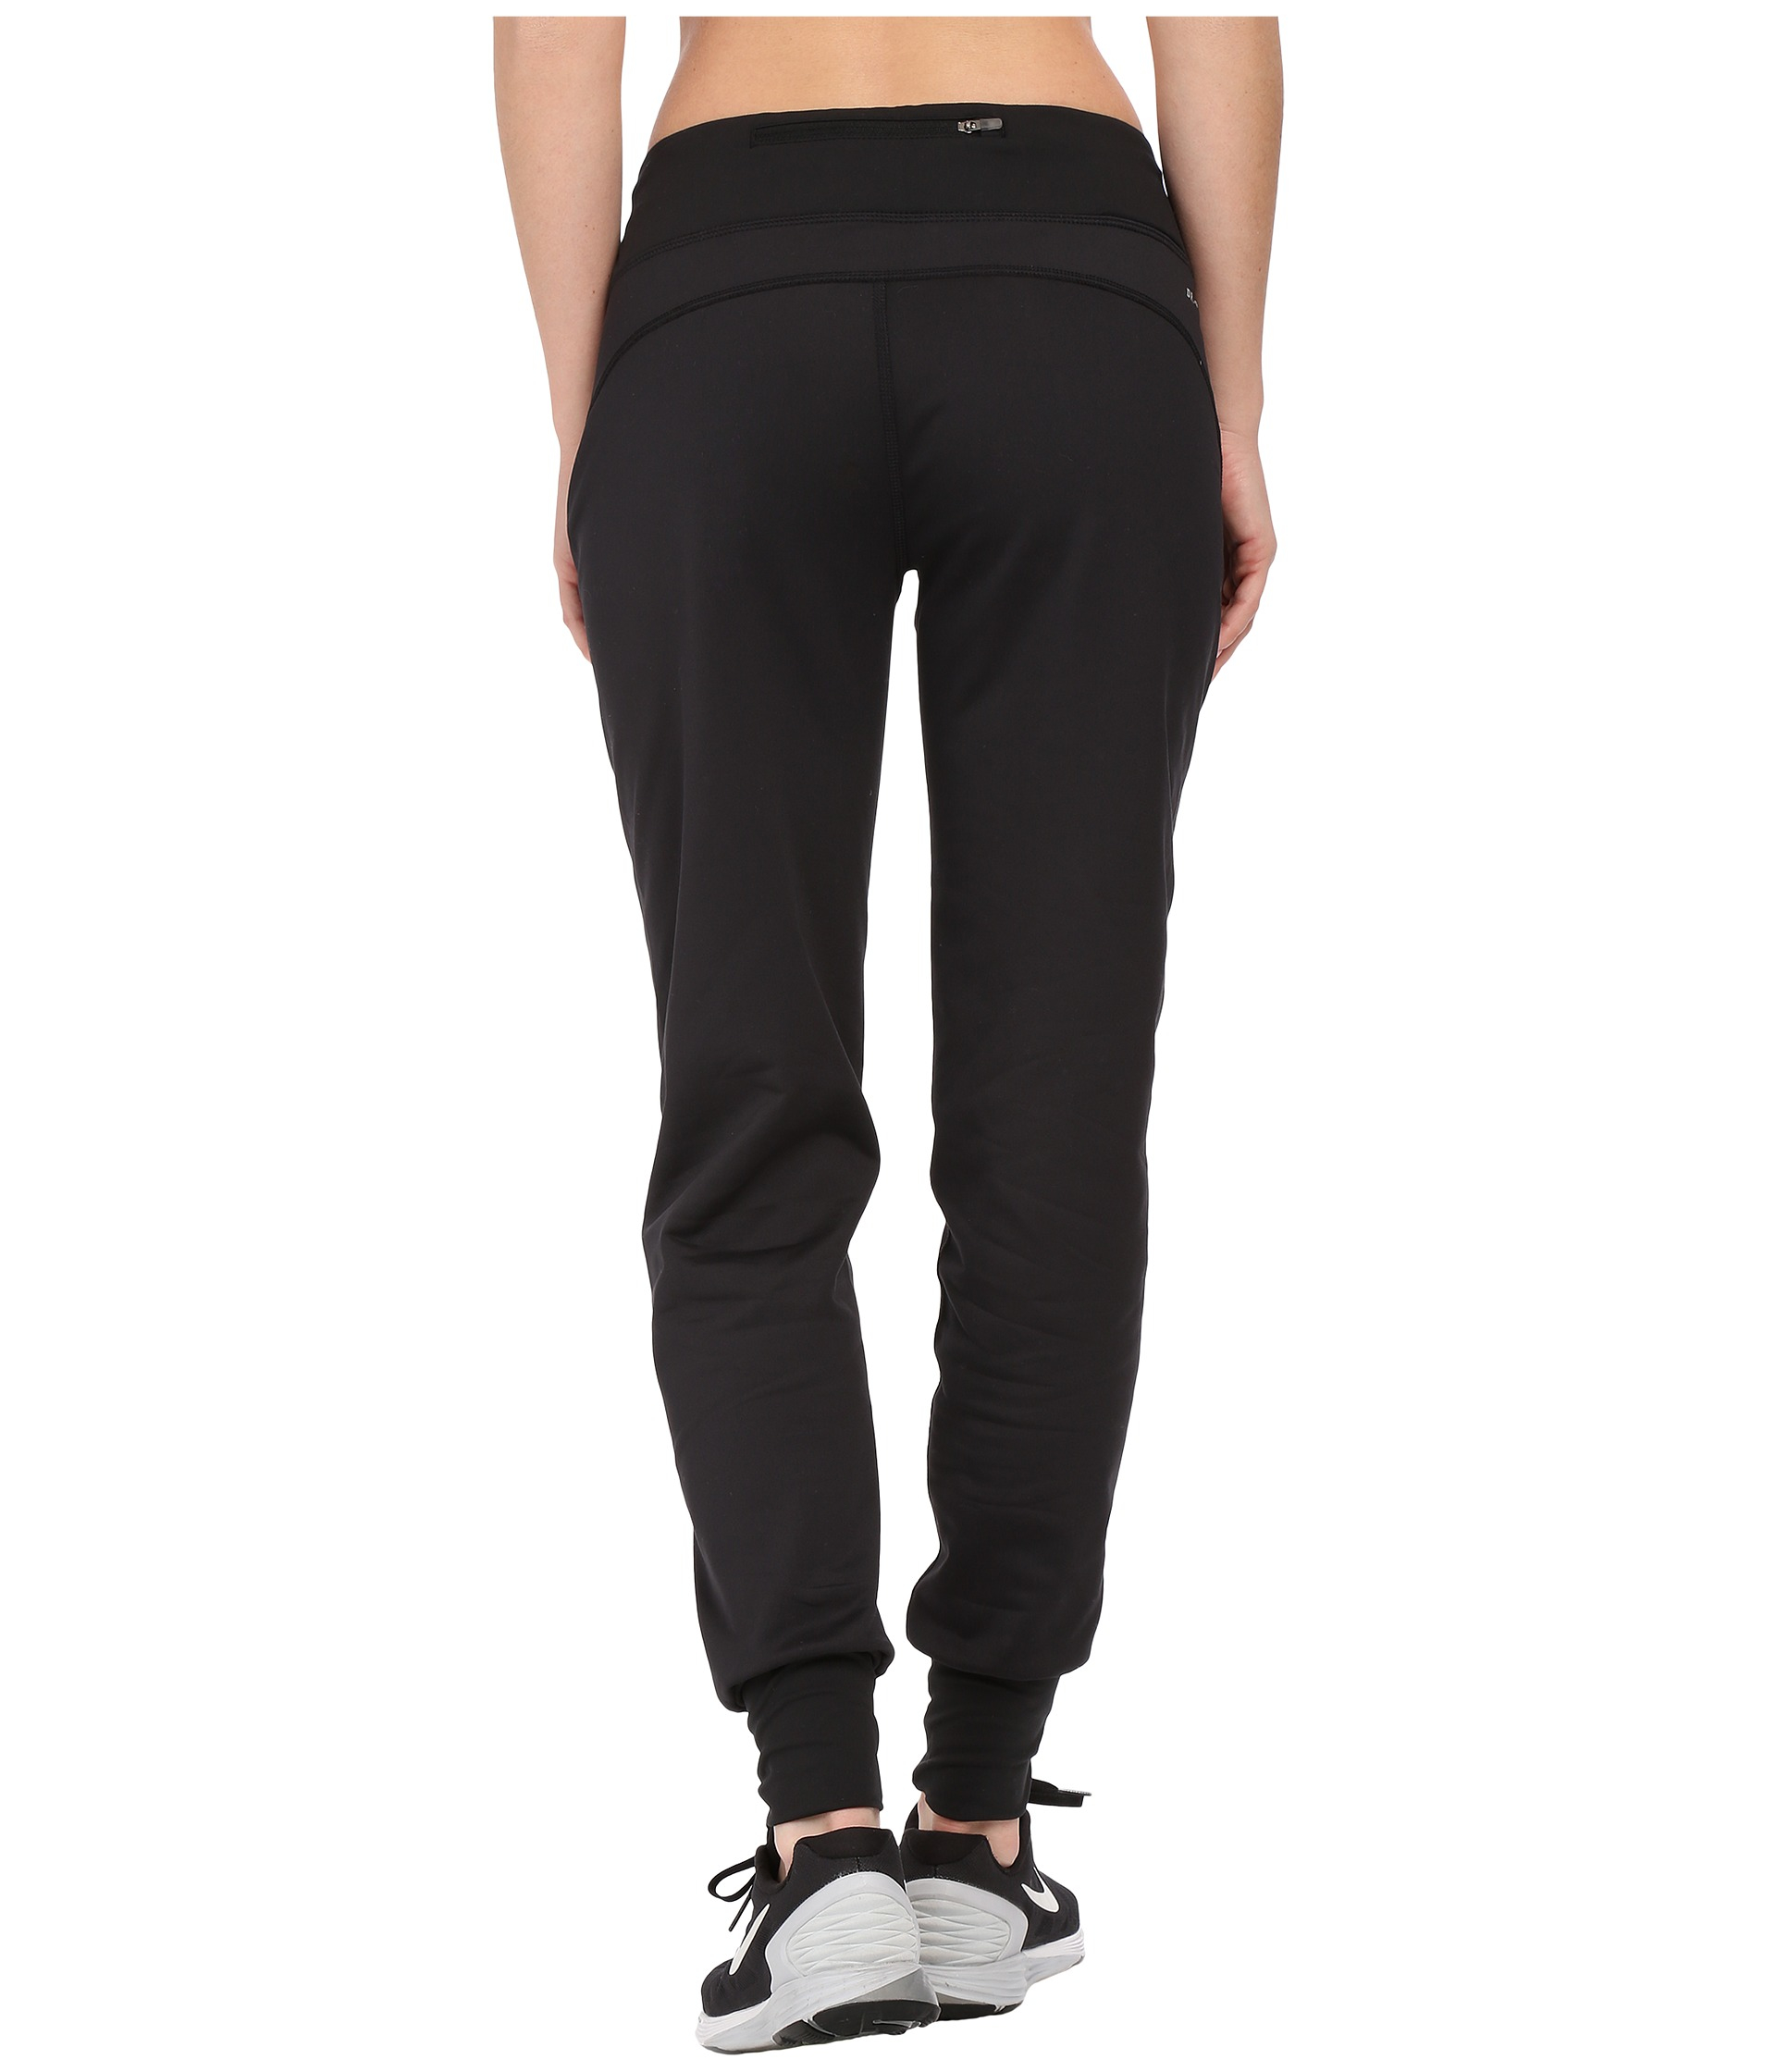 Lyst - Nike Dri-fit™ Thermal Pants in Black